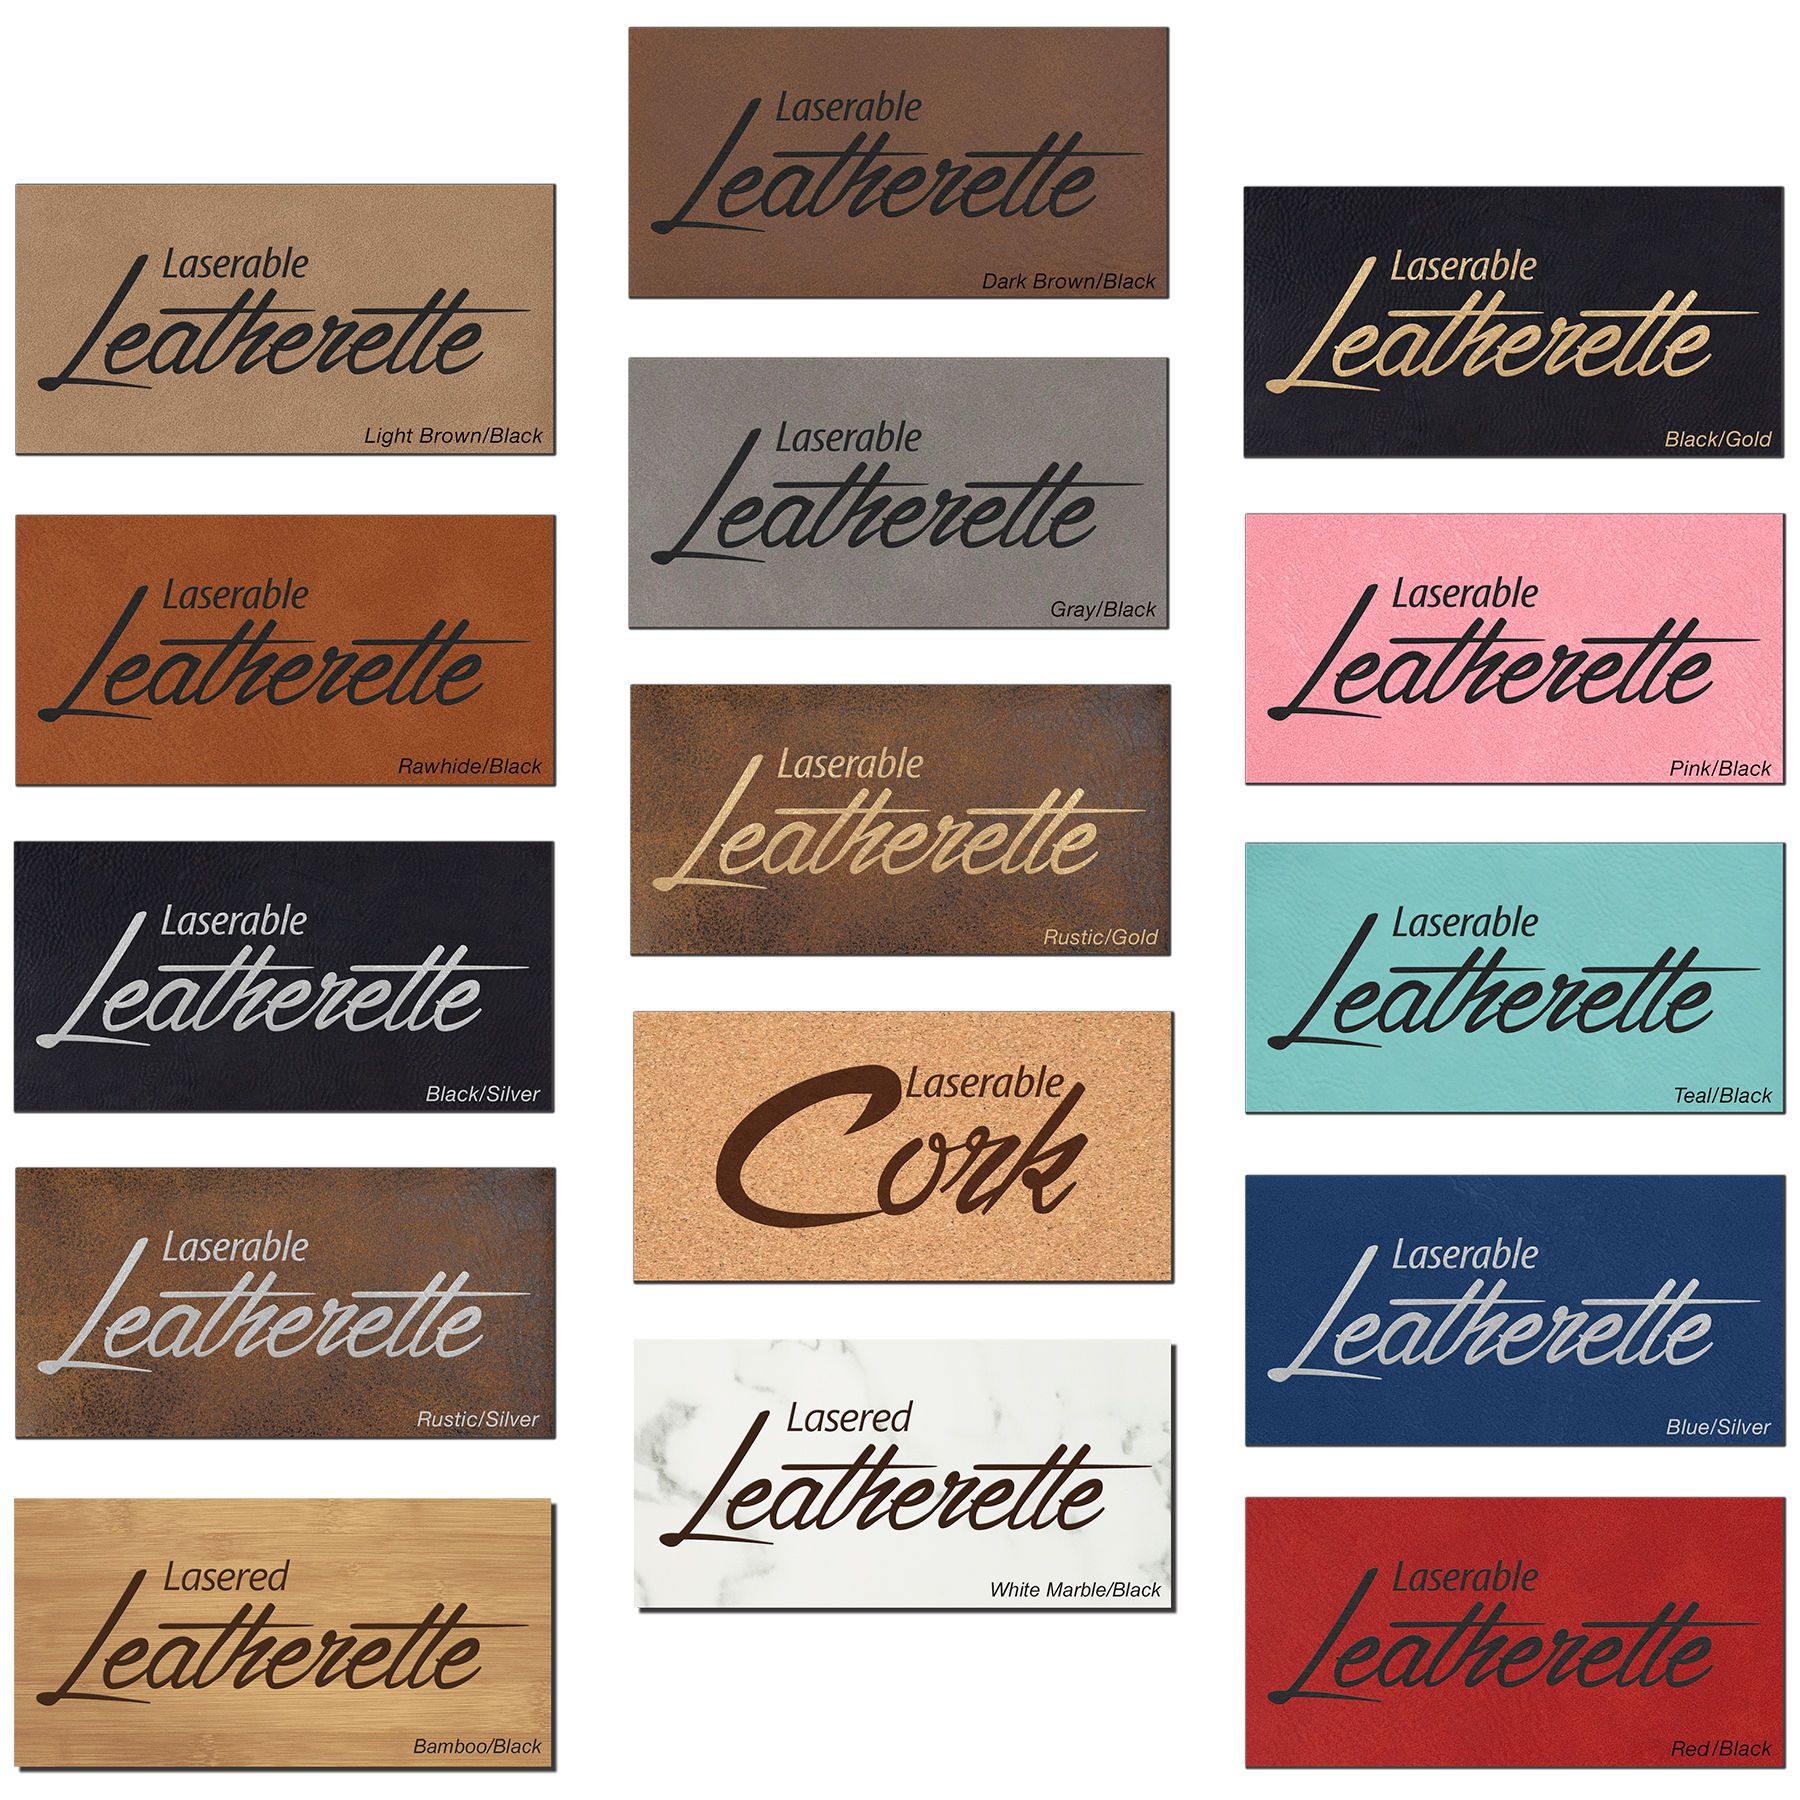 Laserable Leatherette 12 x 24 Sheet